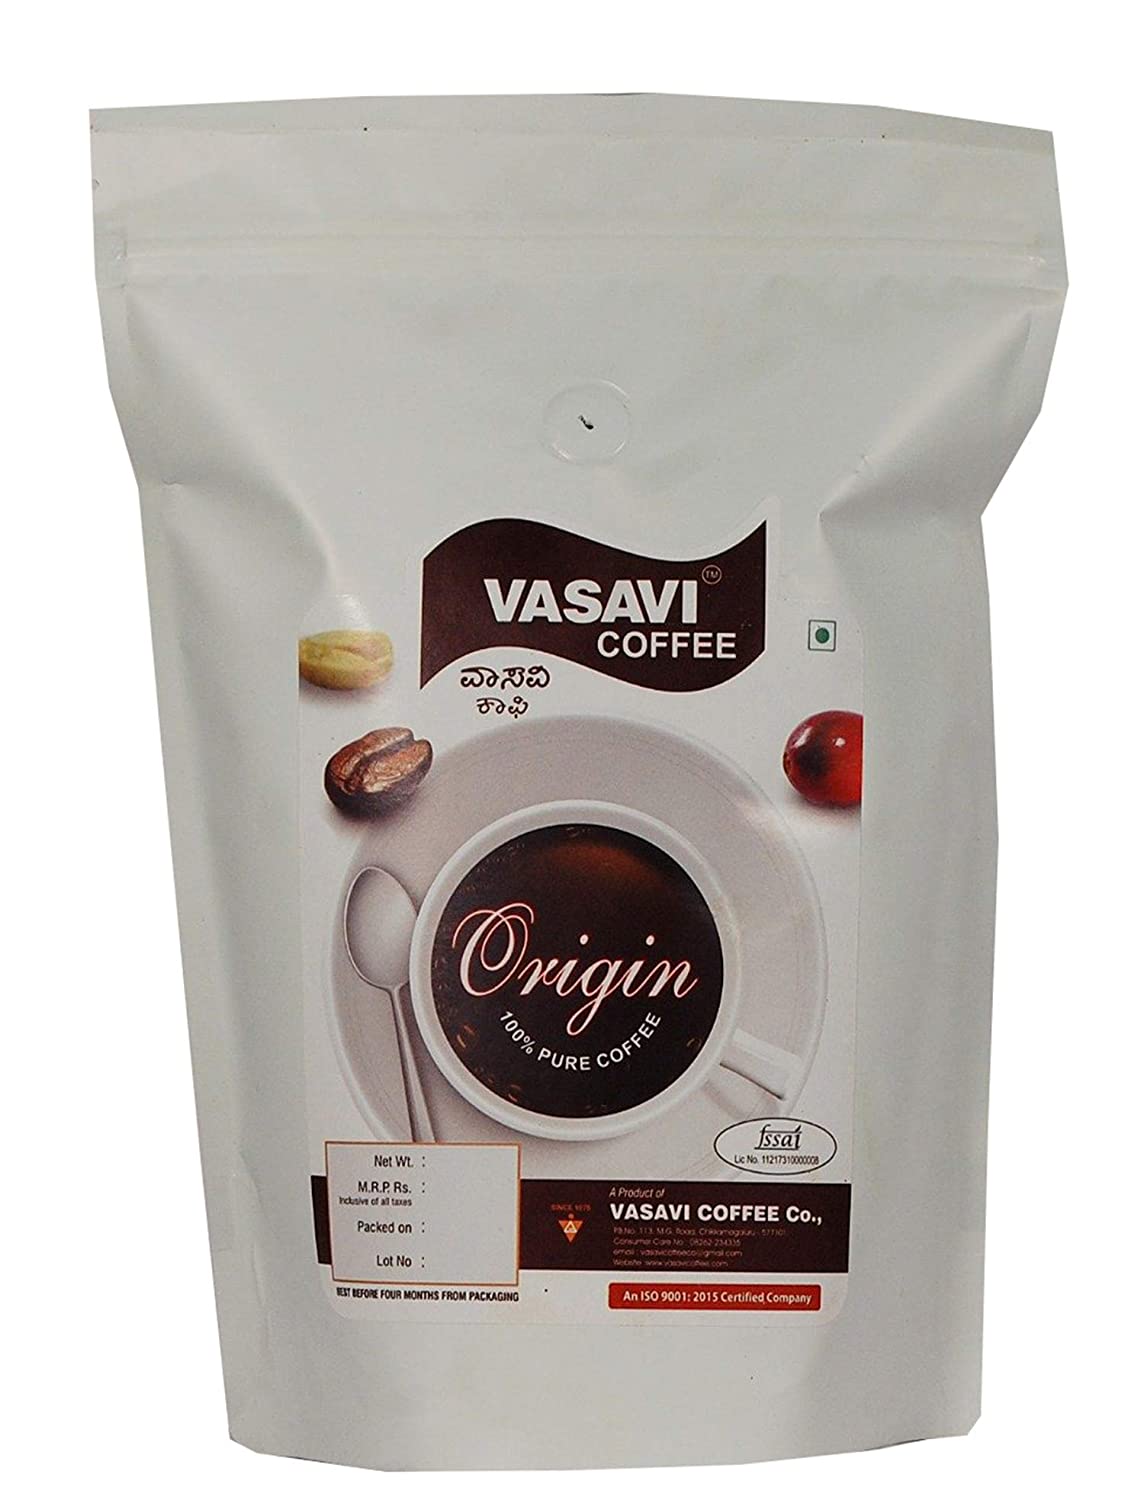 Origin, Pure Coffee - VASAVI COFFEE Chikmagalur